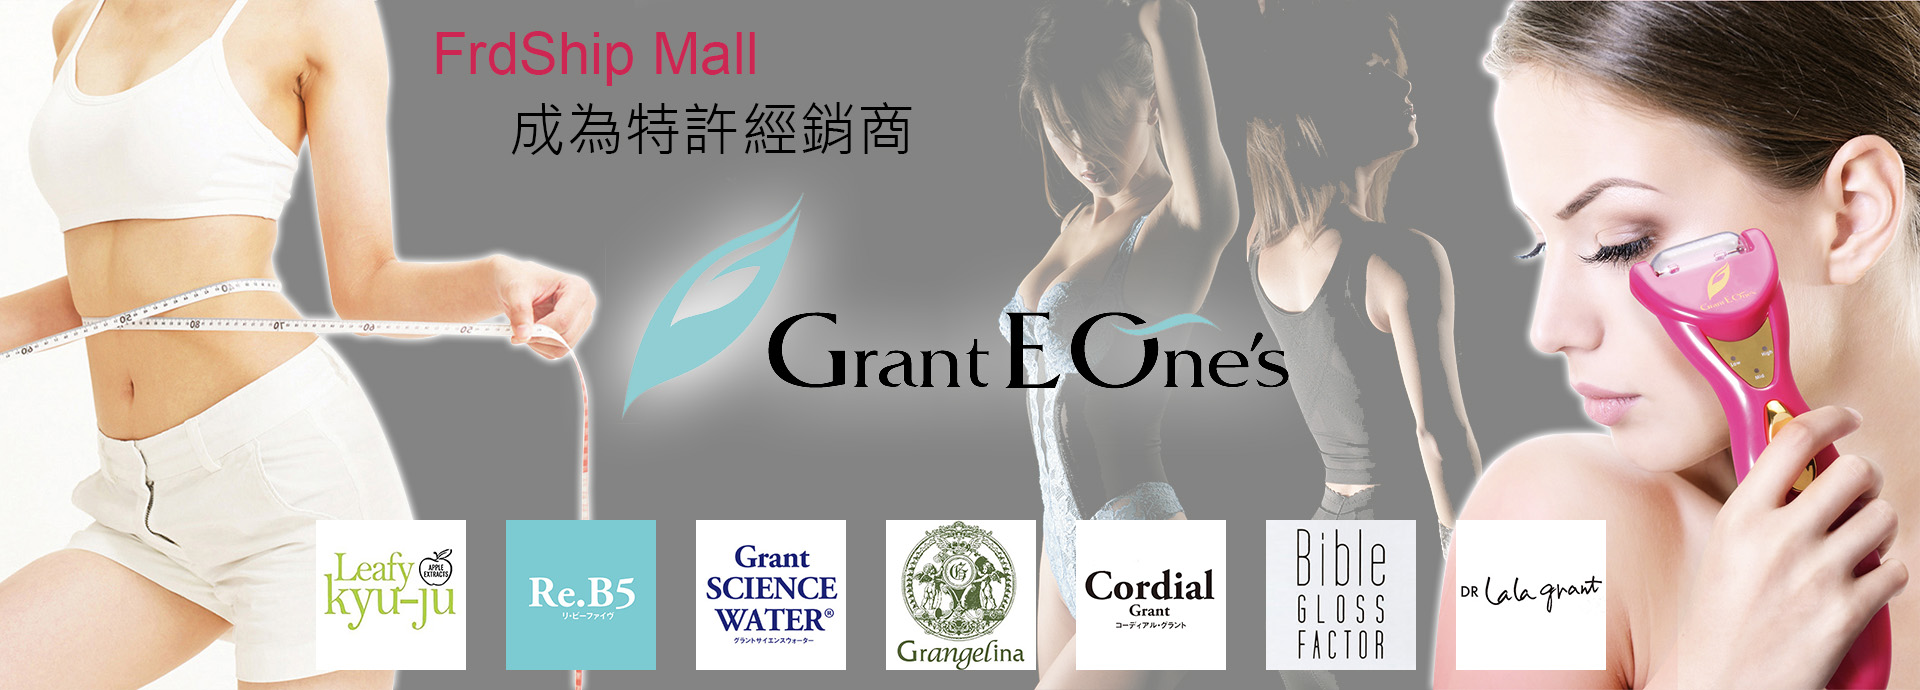 FrdShip Mall 為日本品牌 Grant E One's 特許香港經銷商